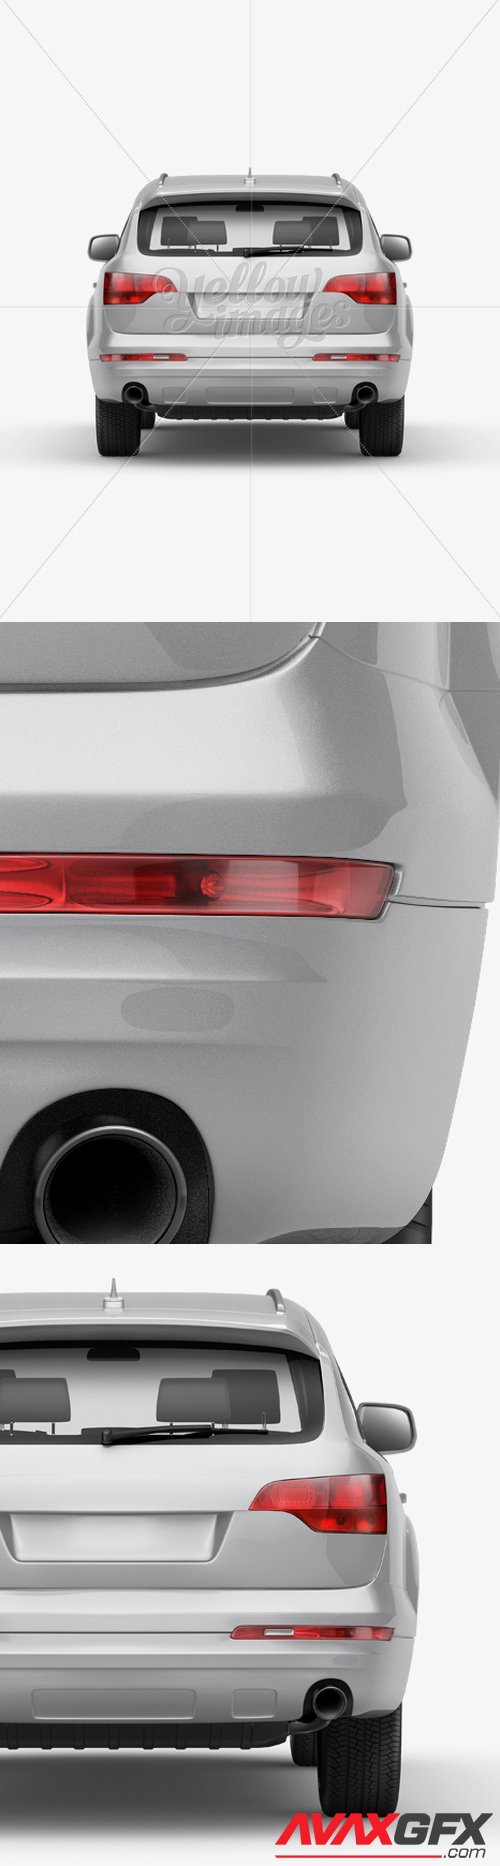 Audi Q7 Mockup - Back View 13322 TIF